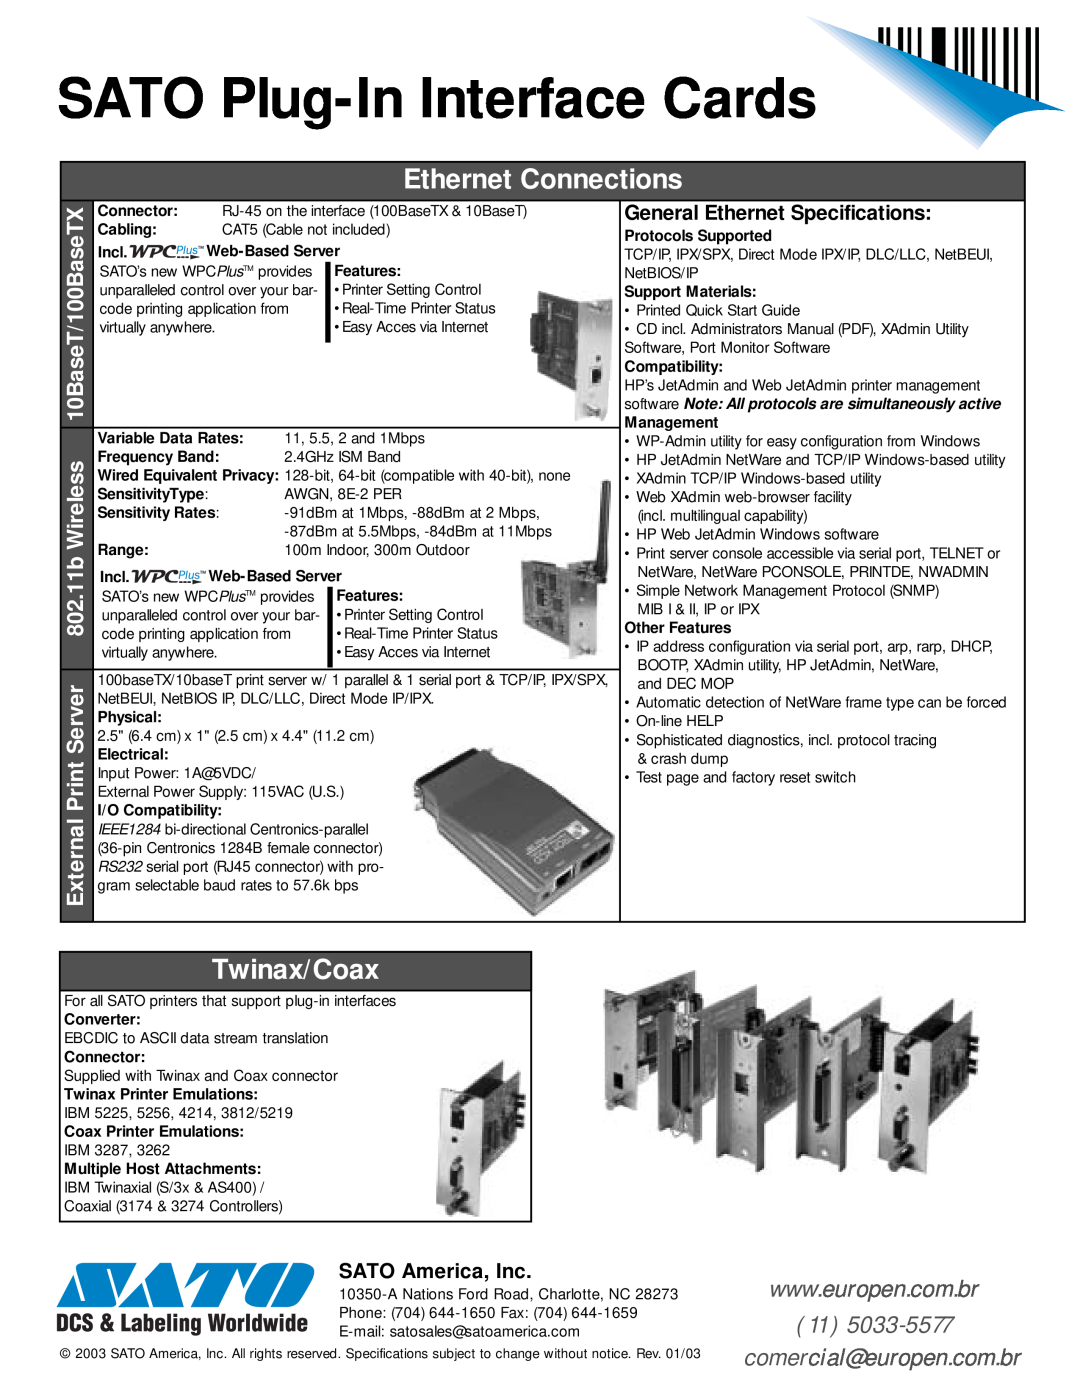 SATO RS232 Ethernet Connections, Twinax/Coax, External Print Server 802.11b Wireless 10BaseT/100BaseTX, SATO America, Inc 